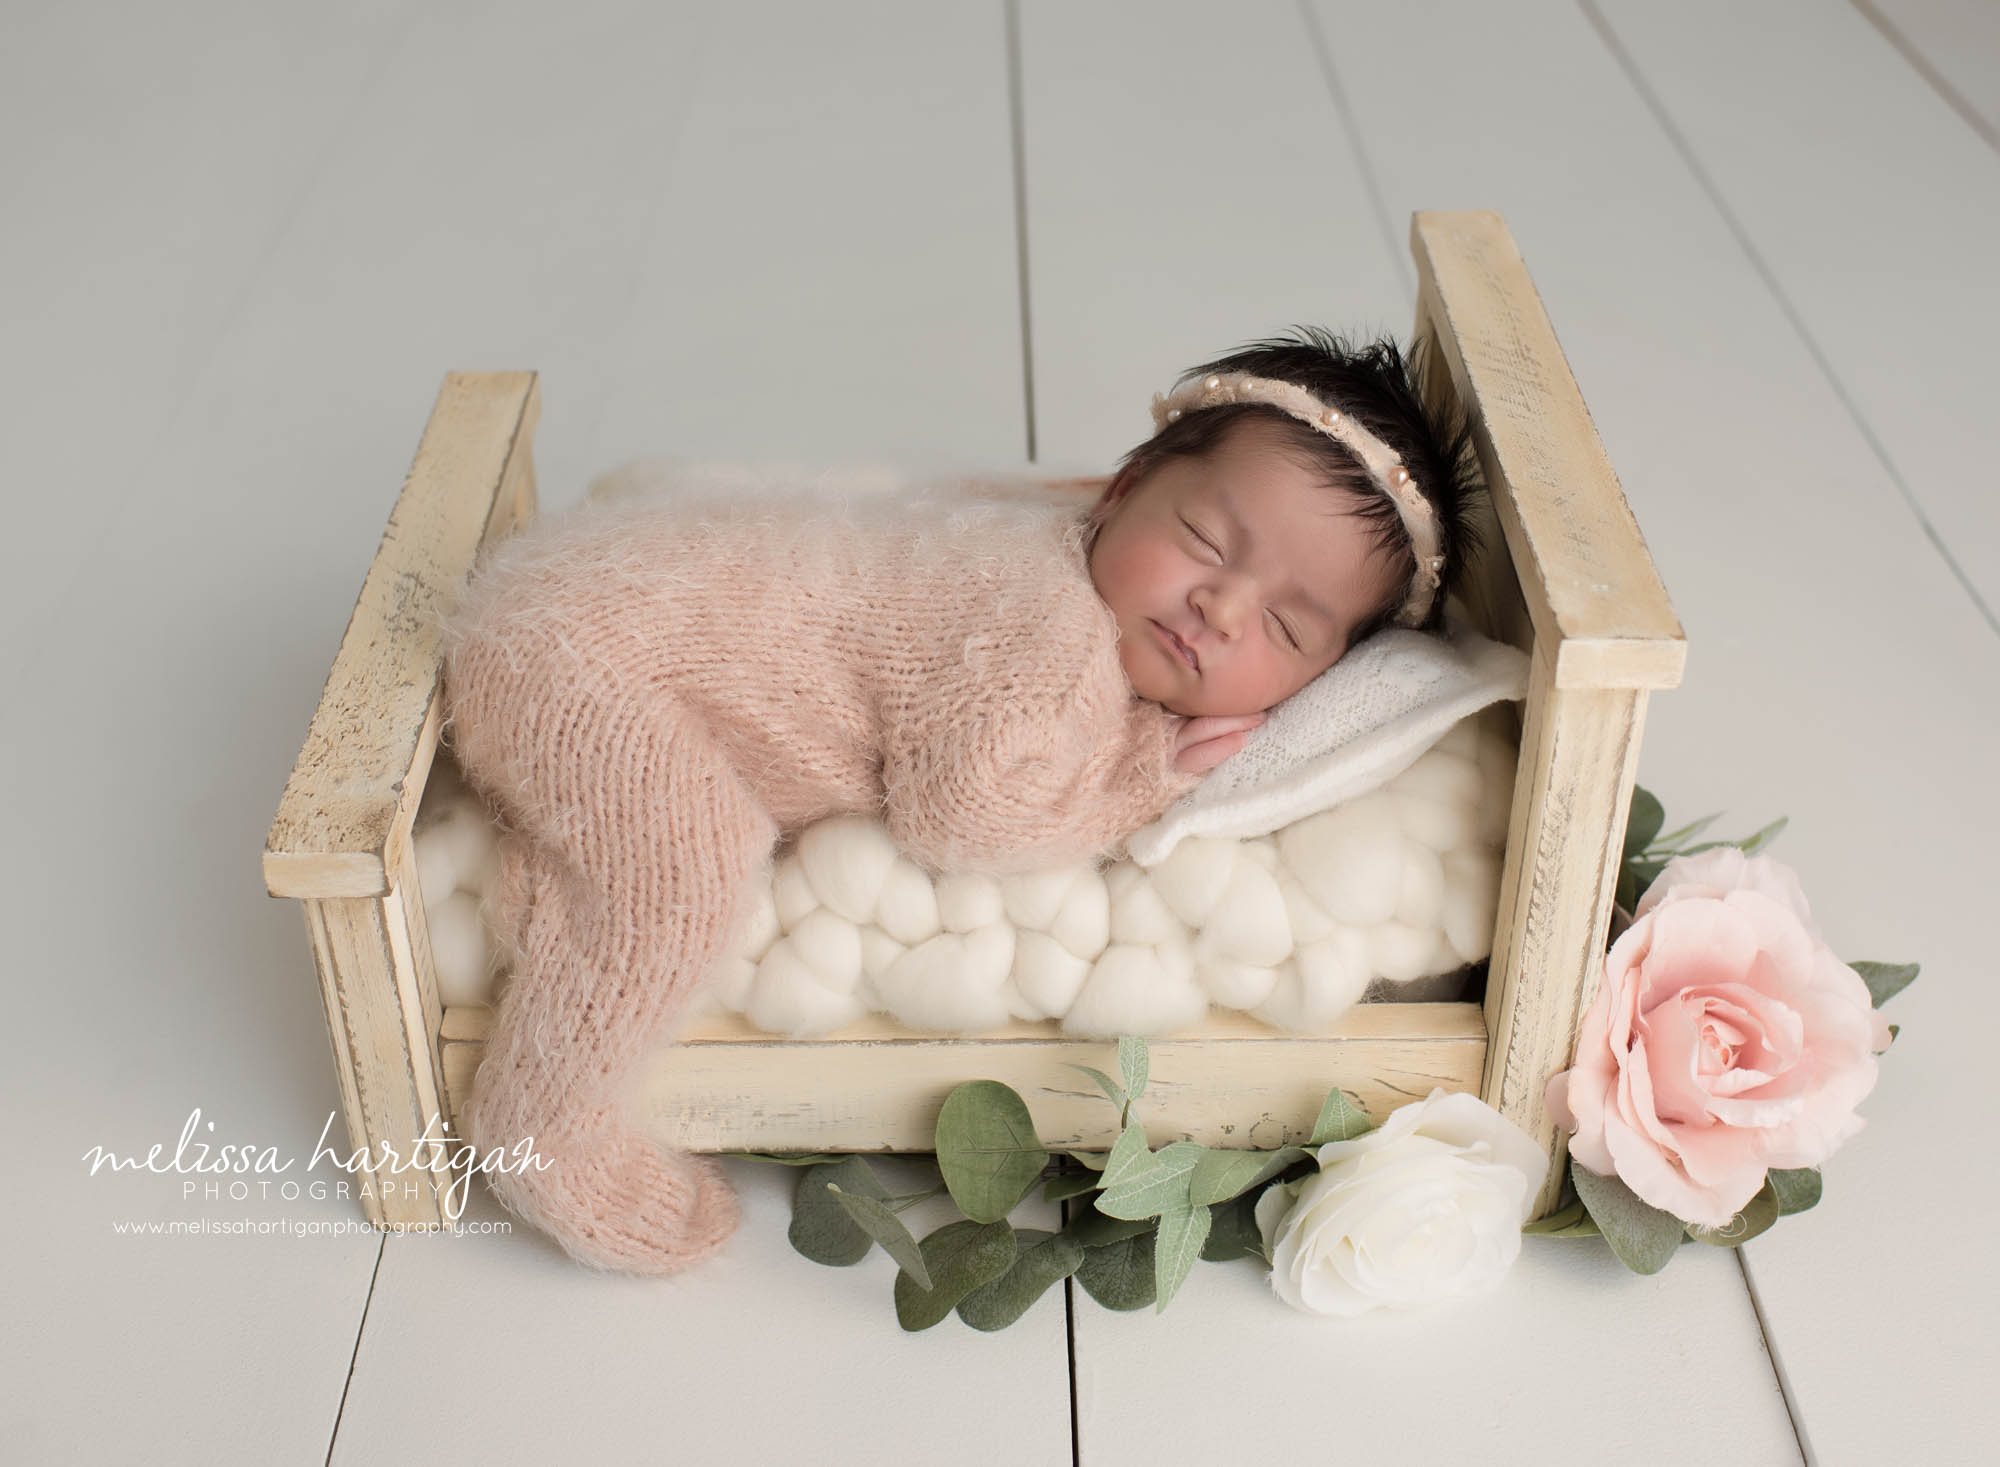 newborn baby girl wearing knitted footed sleeper posed sleeping on cream wooden bed prop windsor locks CT newborn photographer